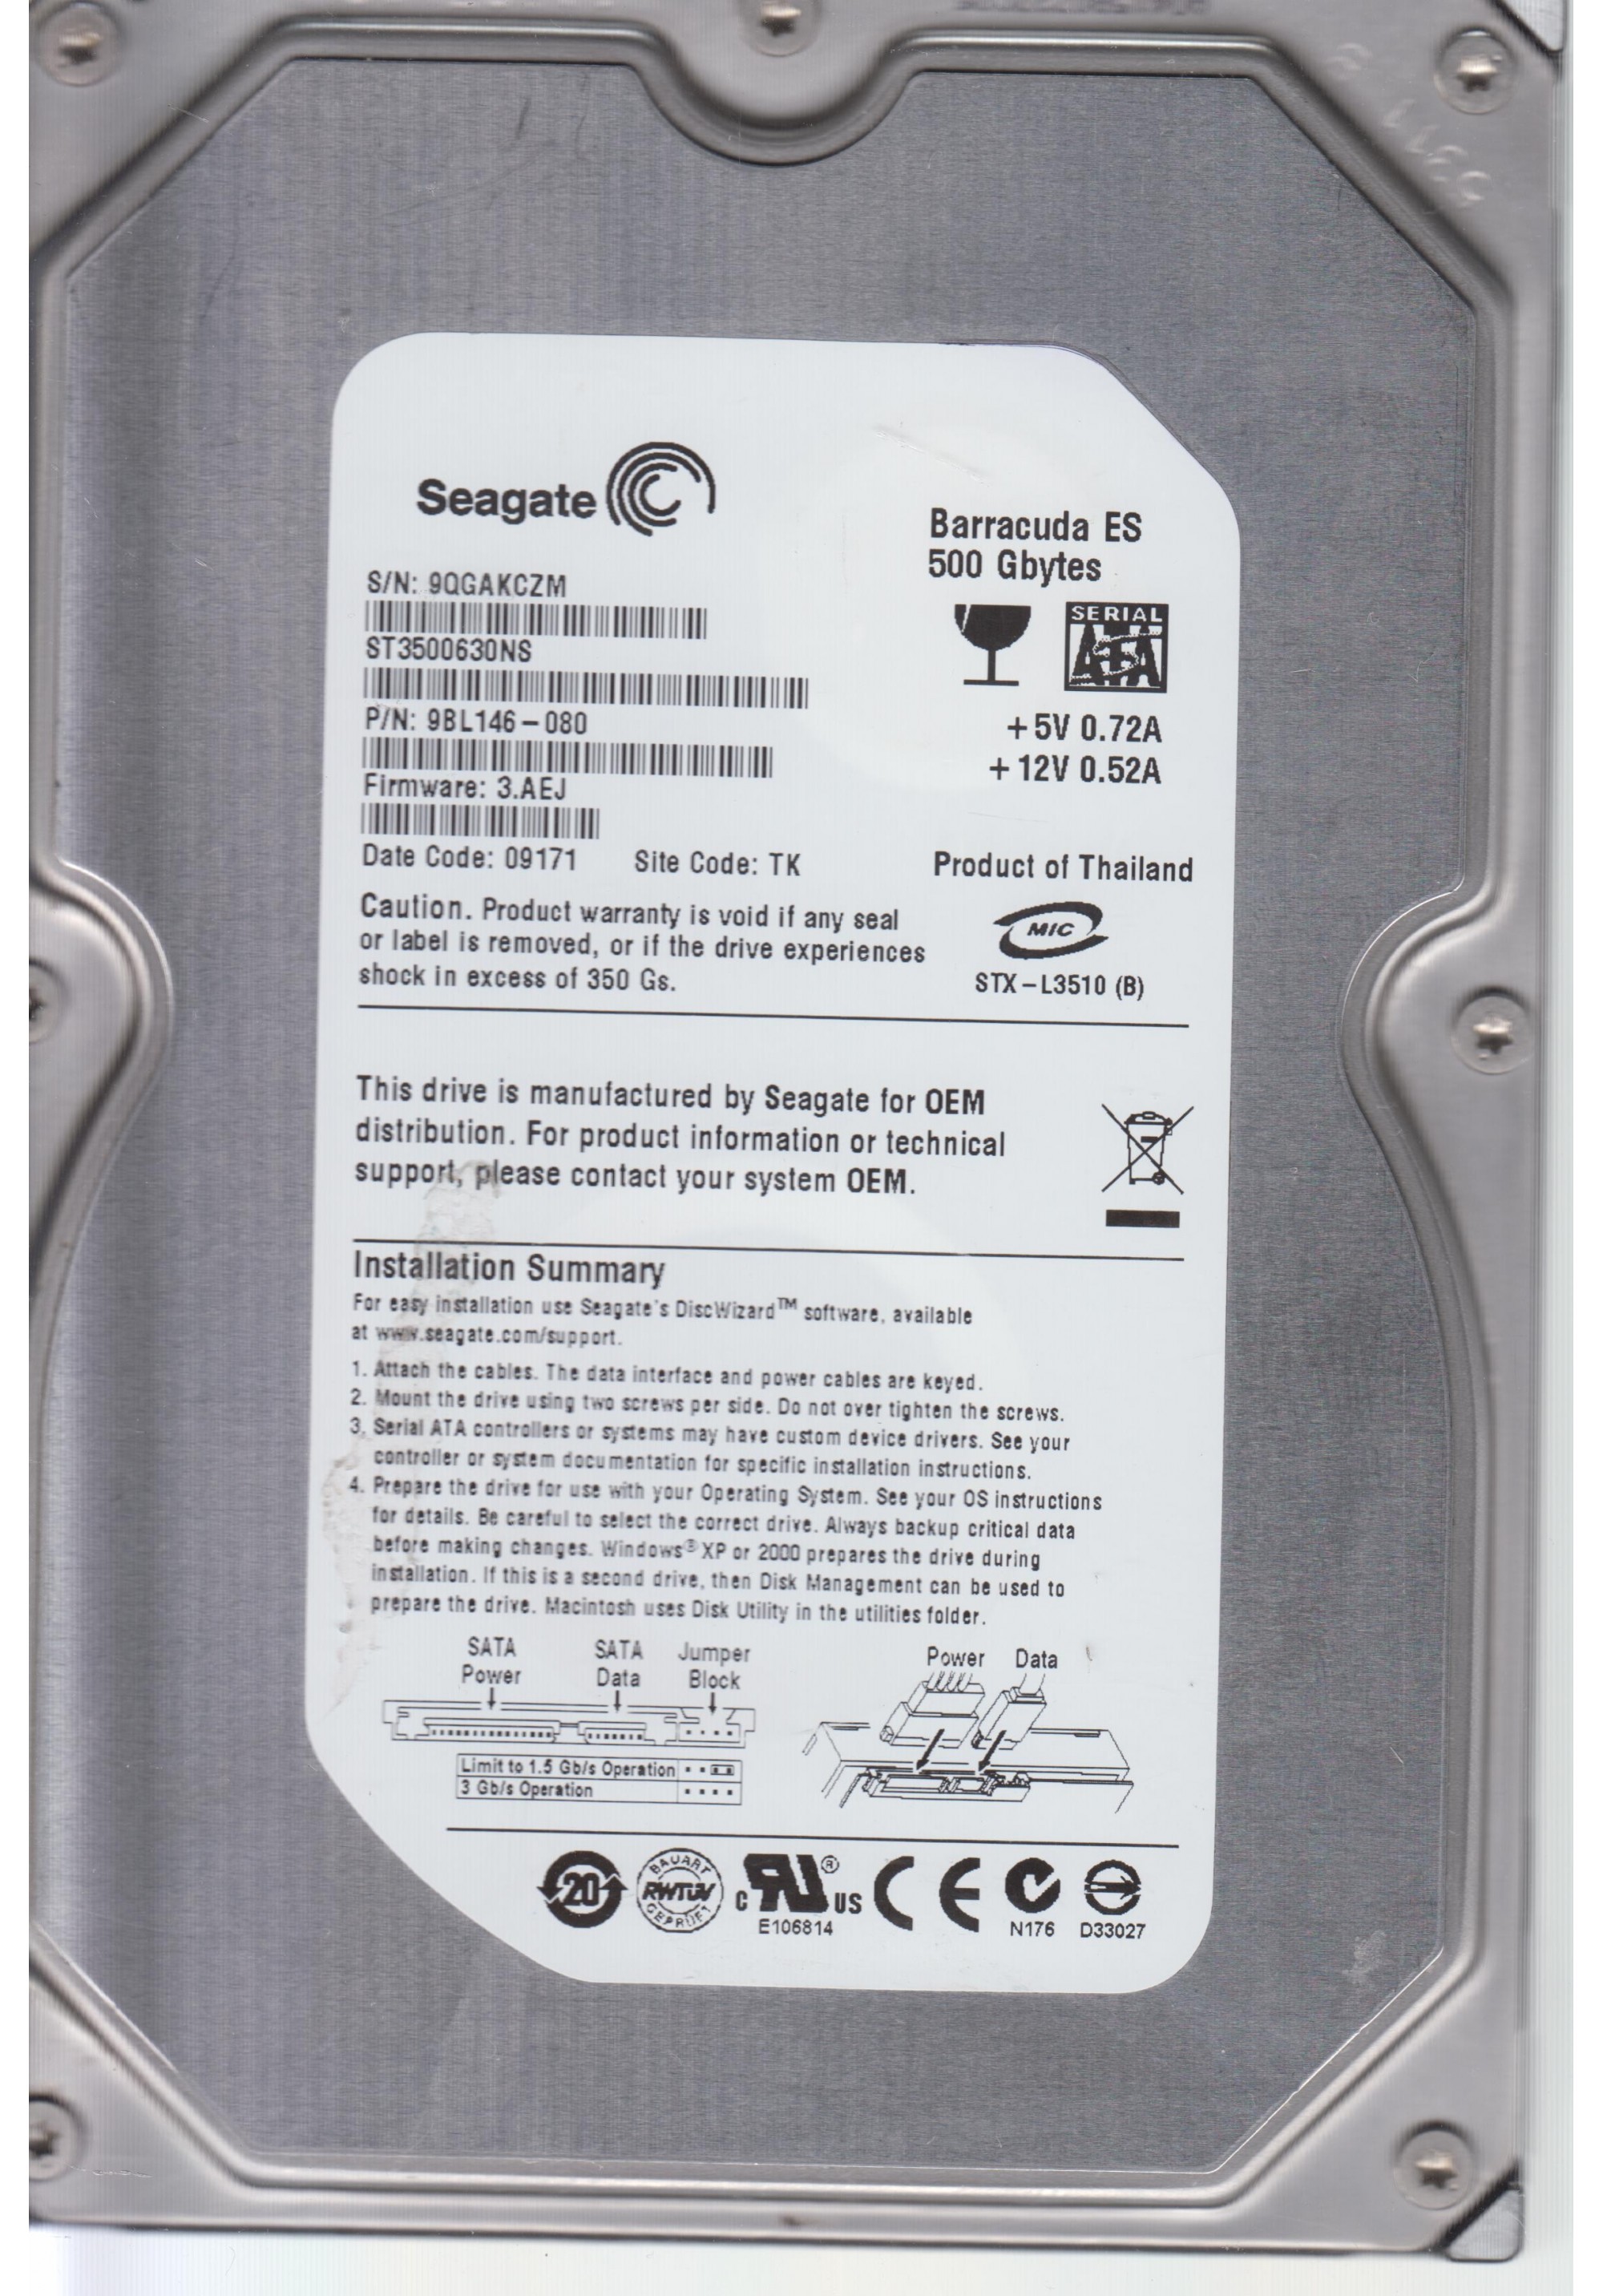 Seagate Desktop HDD ST500DM002 500GB 16MB Cache SATA 6.0Gb/s 3.5" 7200 rpm 